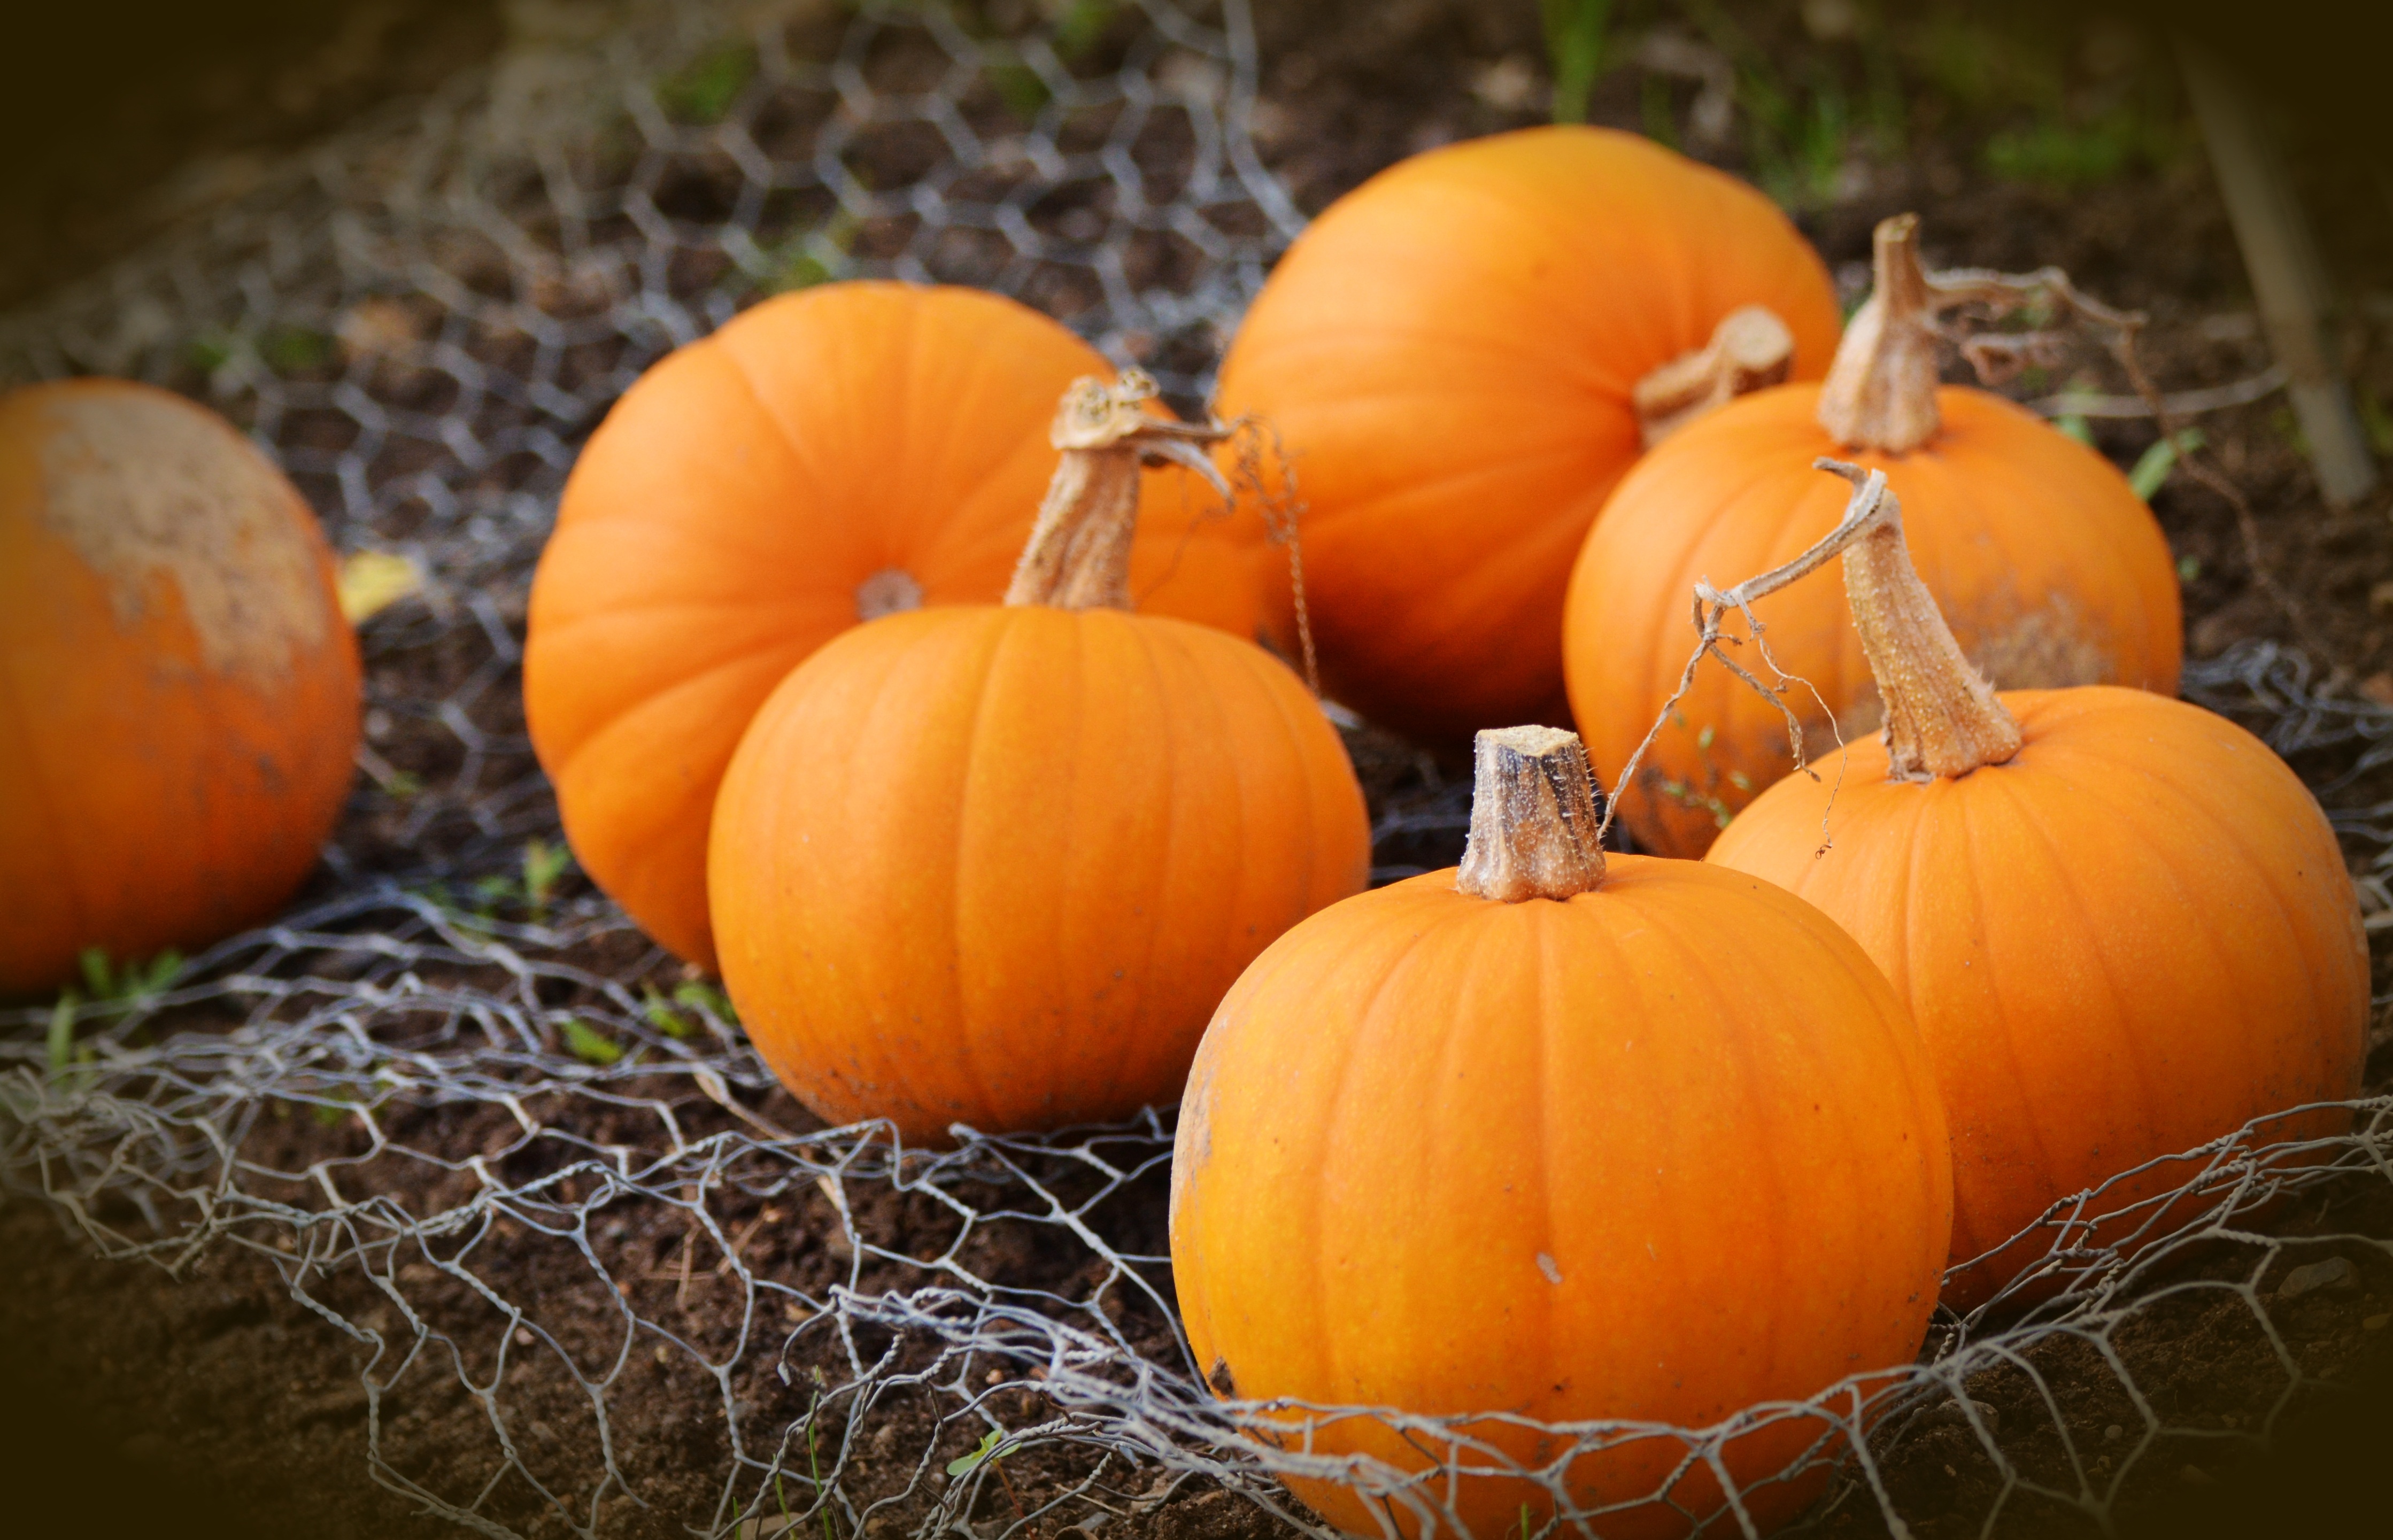 How to Make Your Pumpkins Last Longer